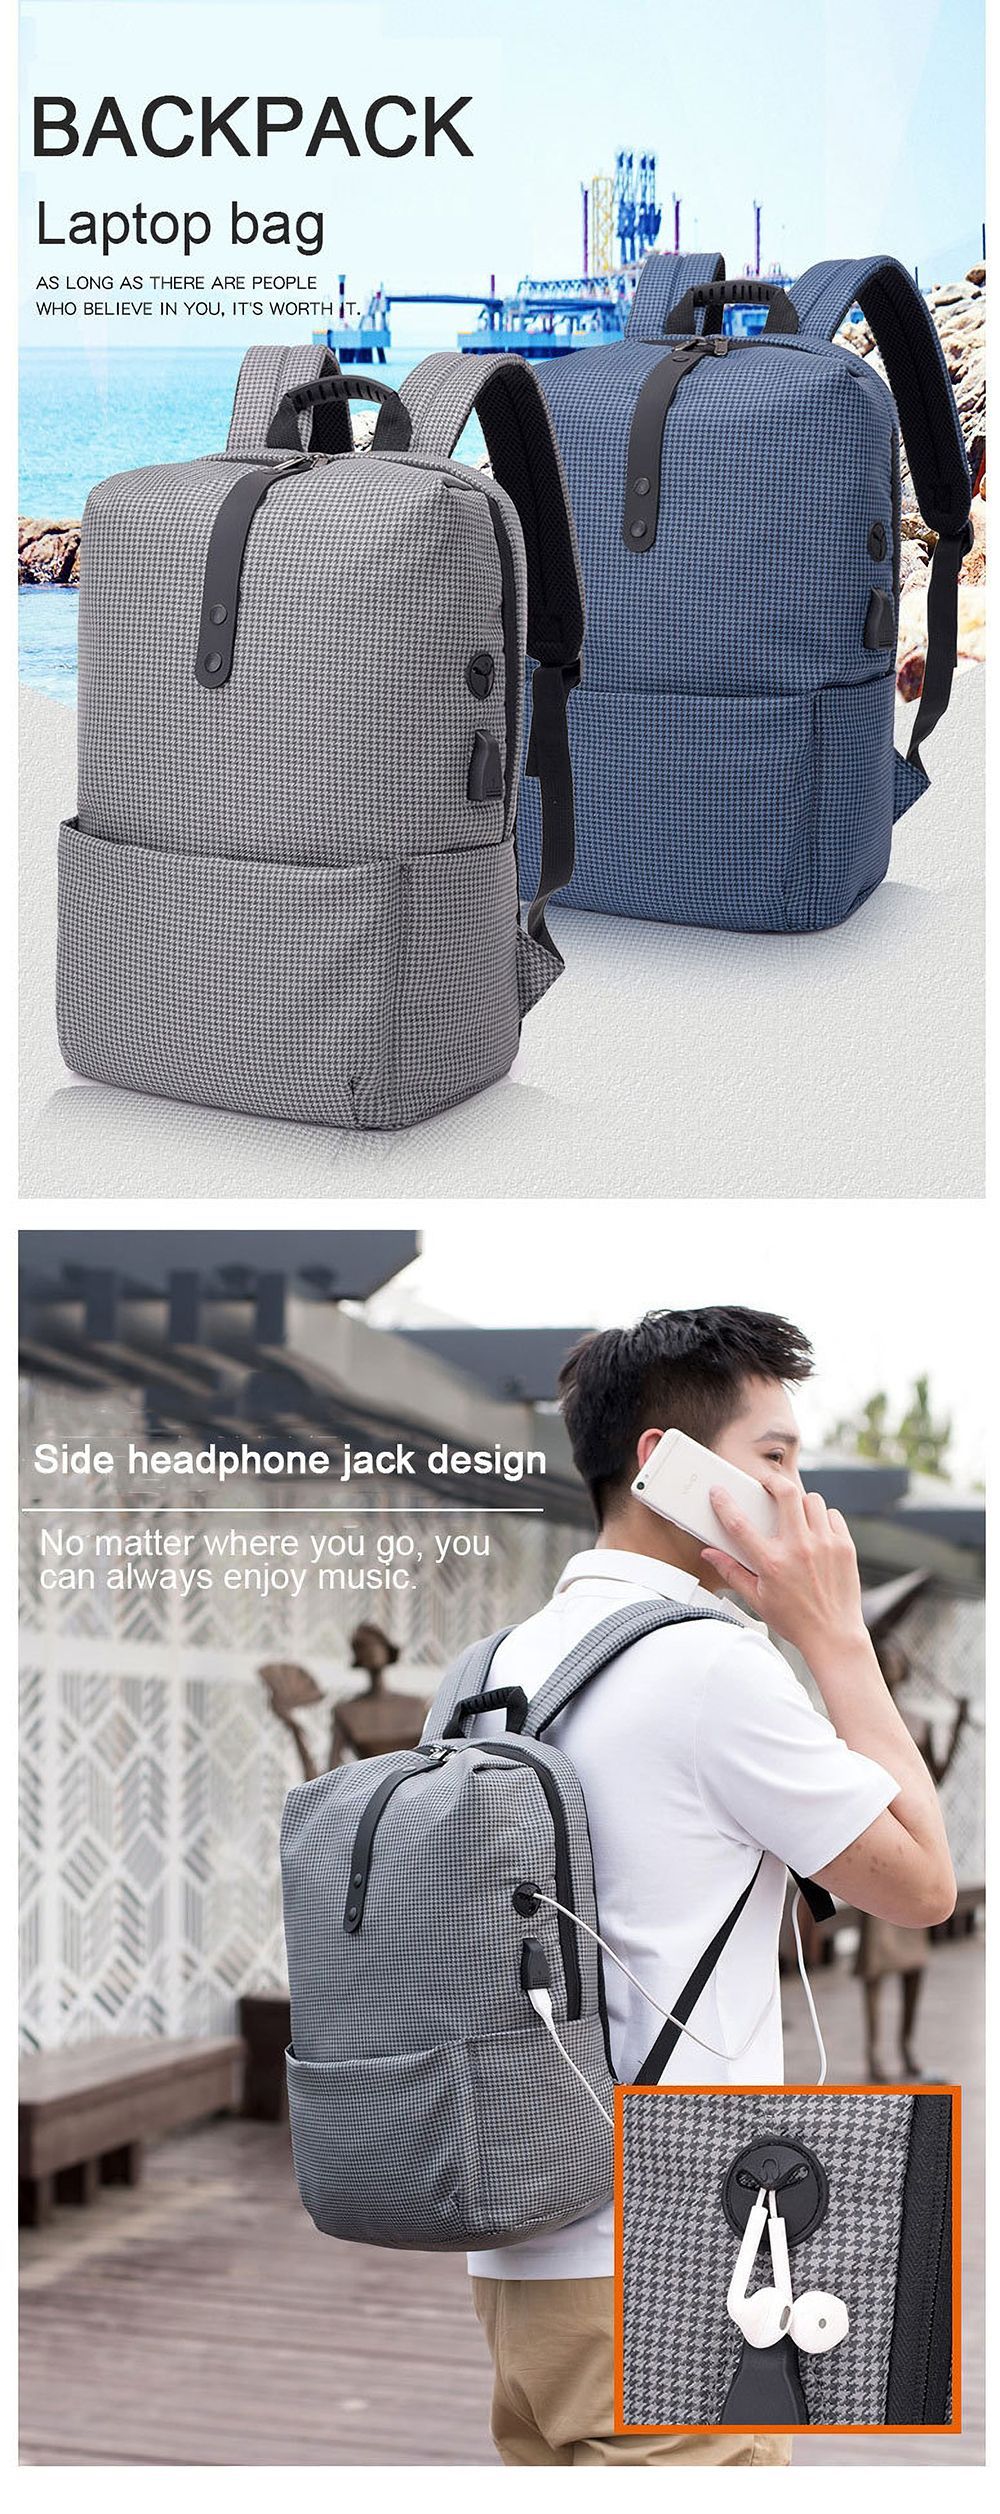 Grid-Backpack-Laptop-Computer-Bag-Schoolbag-Shoulders-Storage-Bag-USB-Charging-with-Headphone-Jack-f-1661568